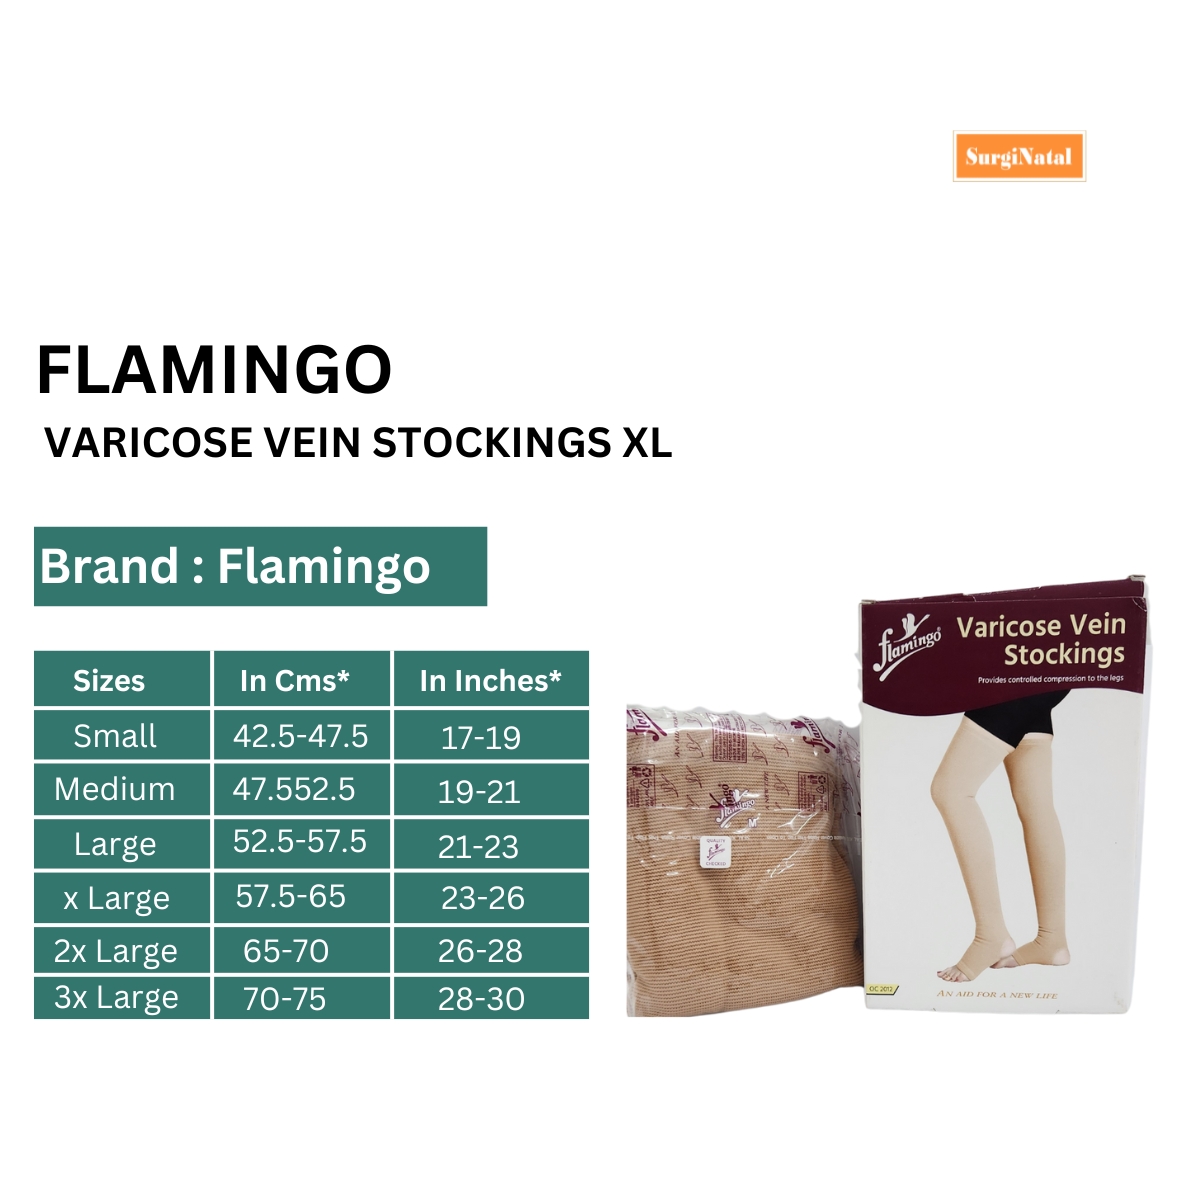 flamingo varicose vein stockings xl